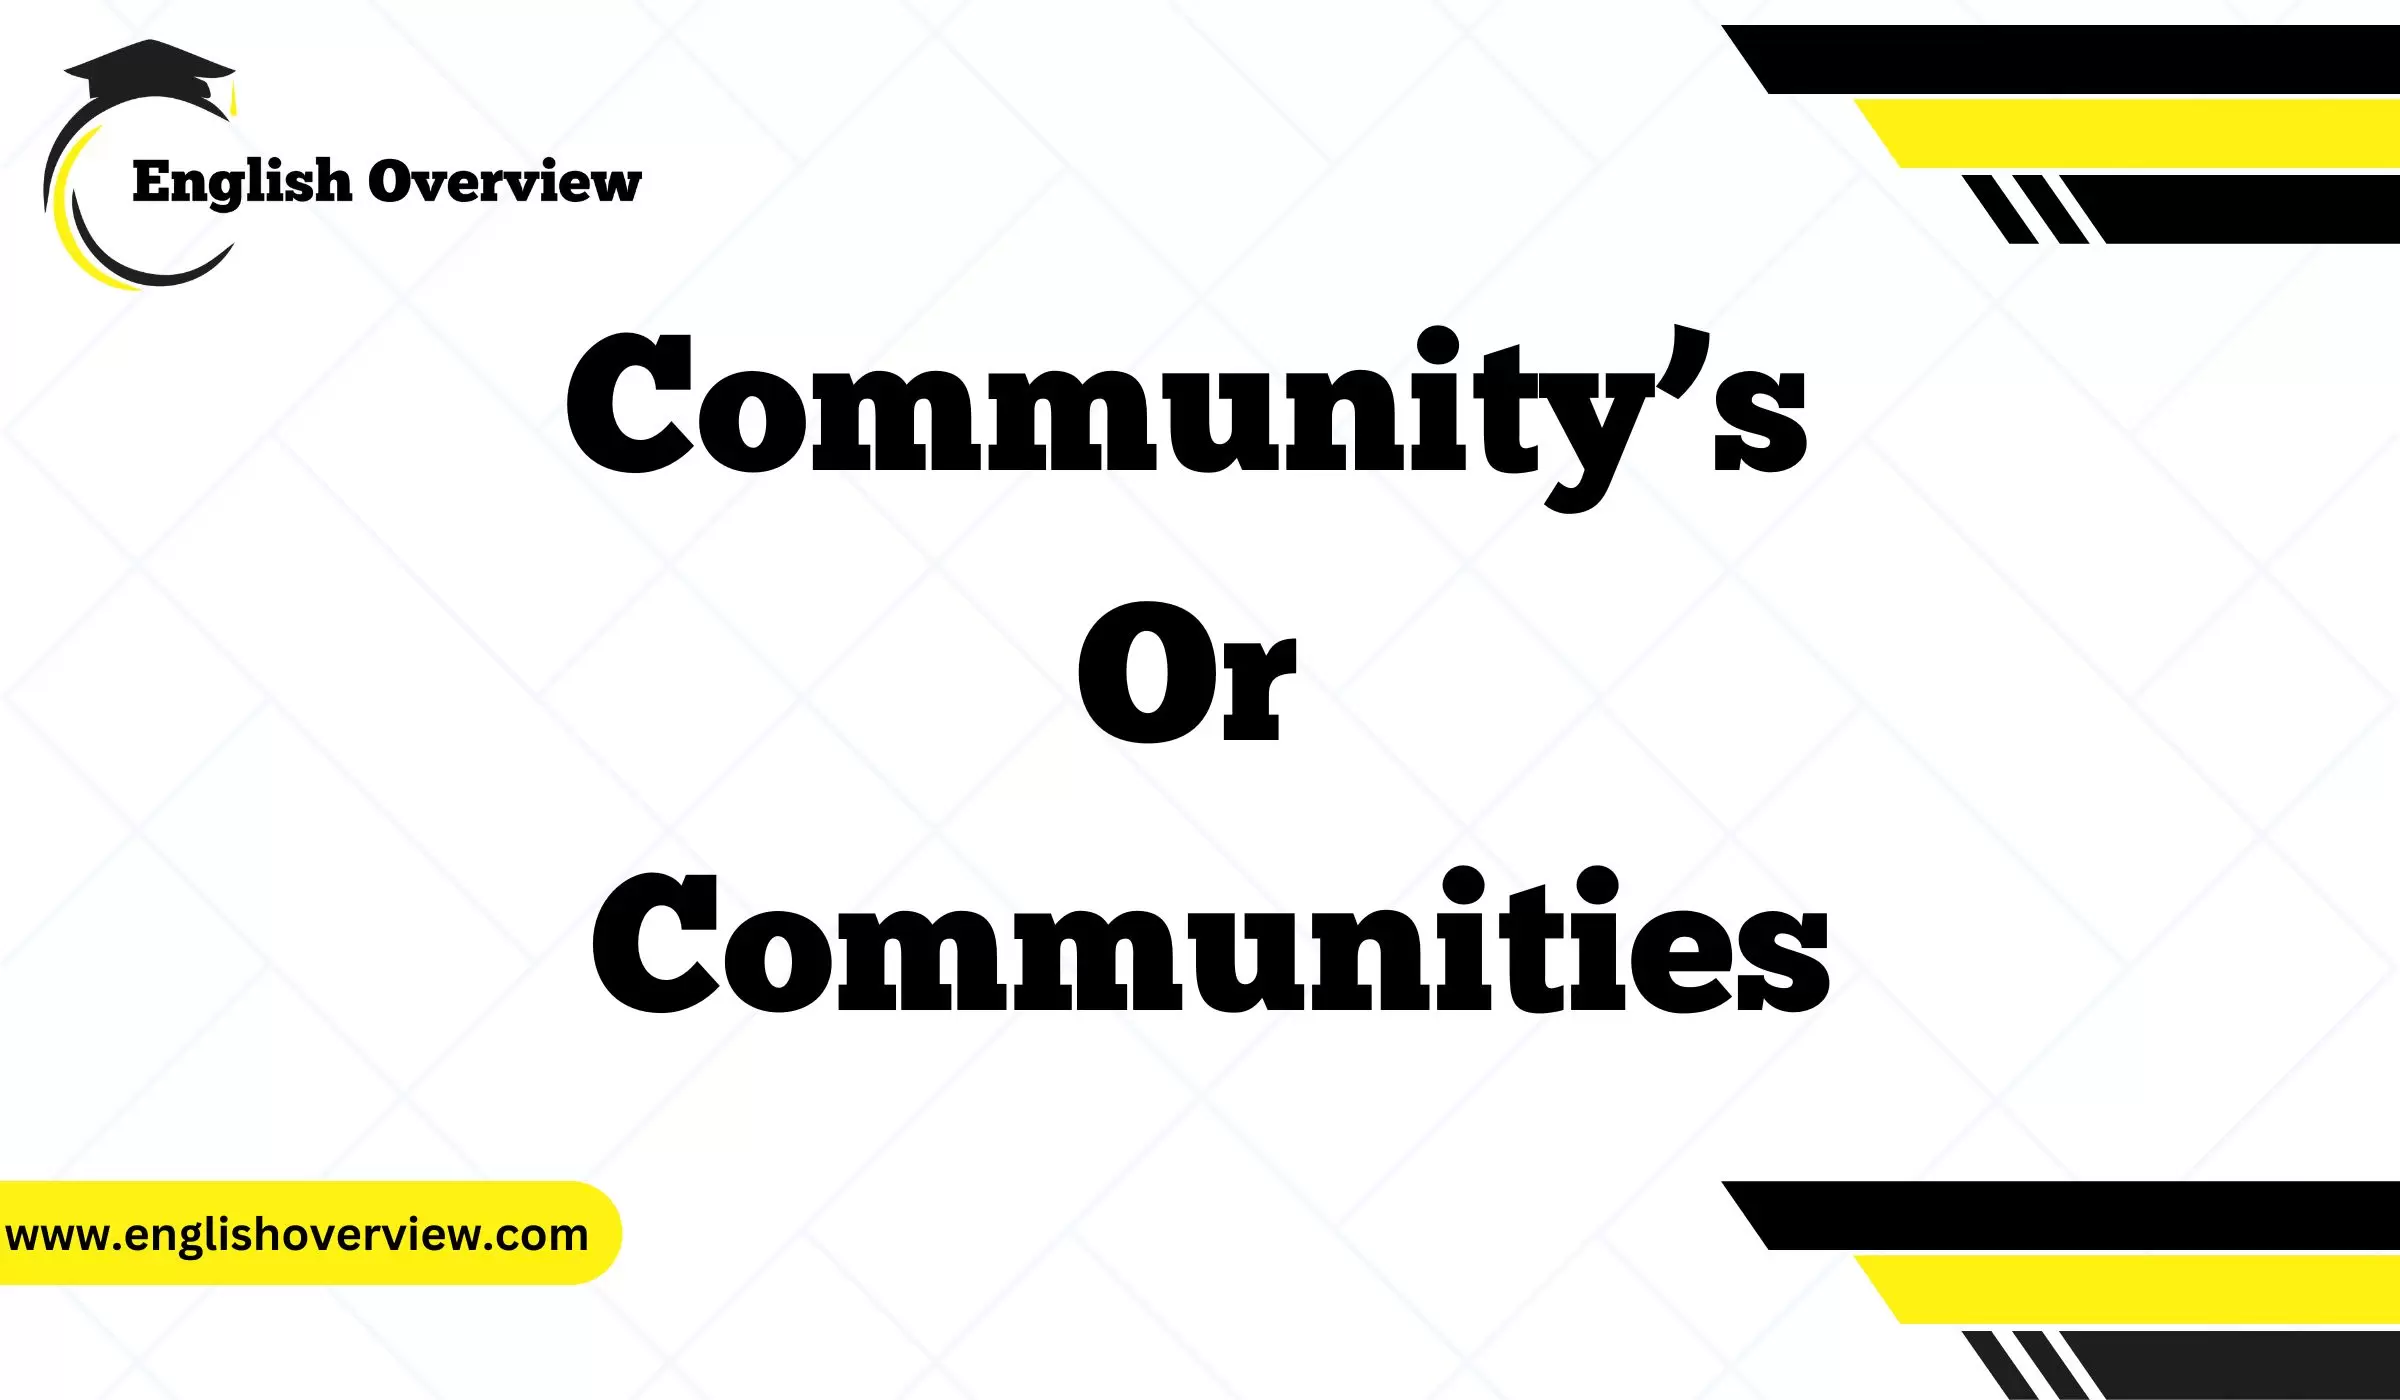 Community’s or Communities